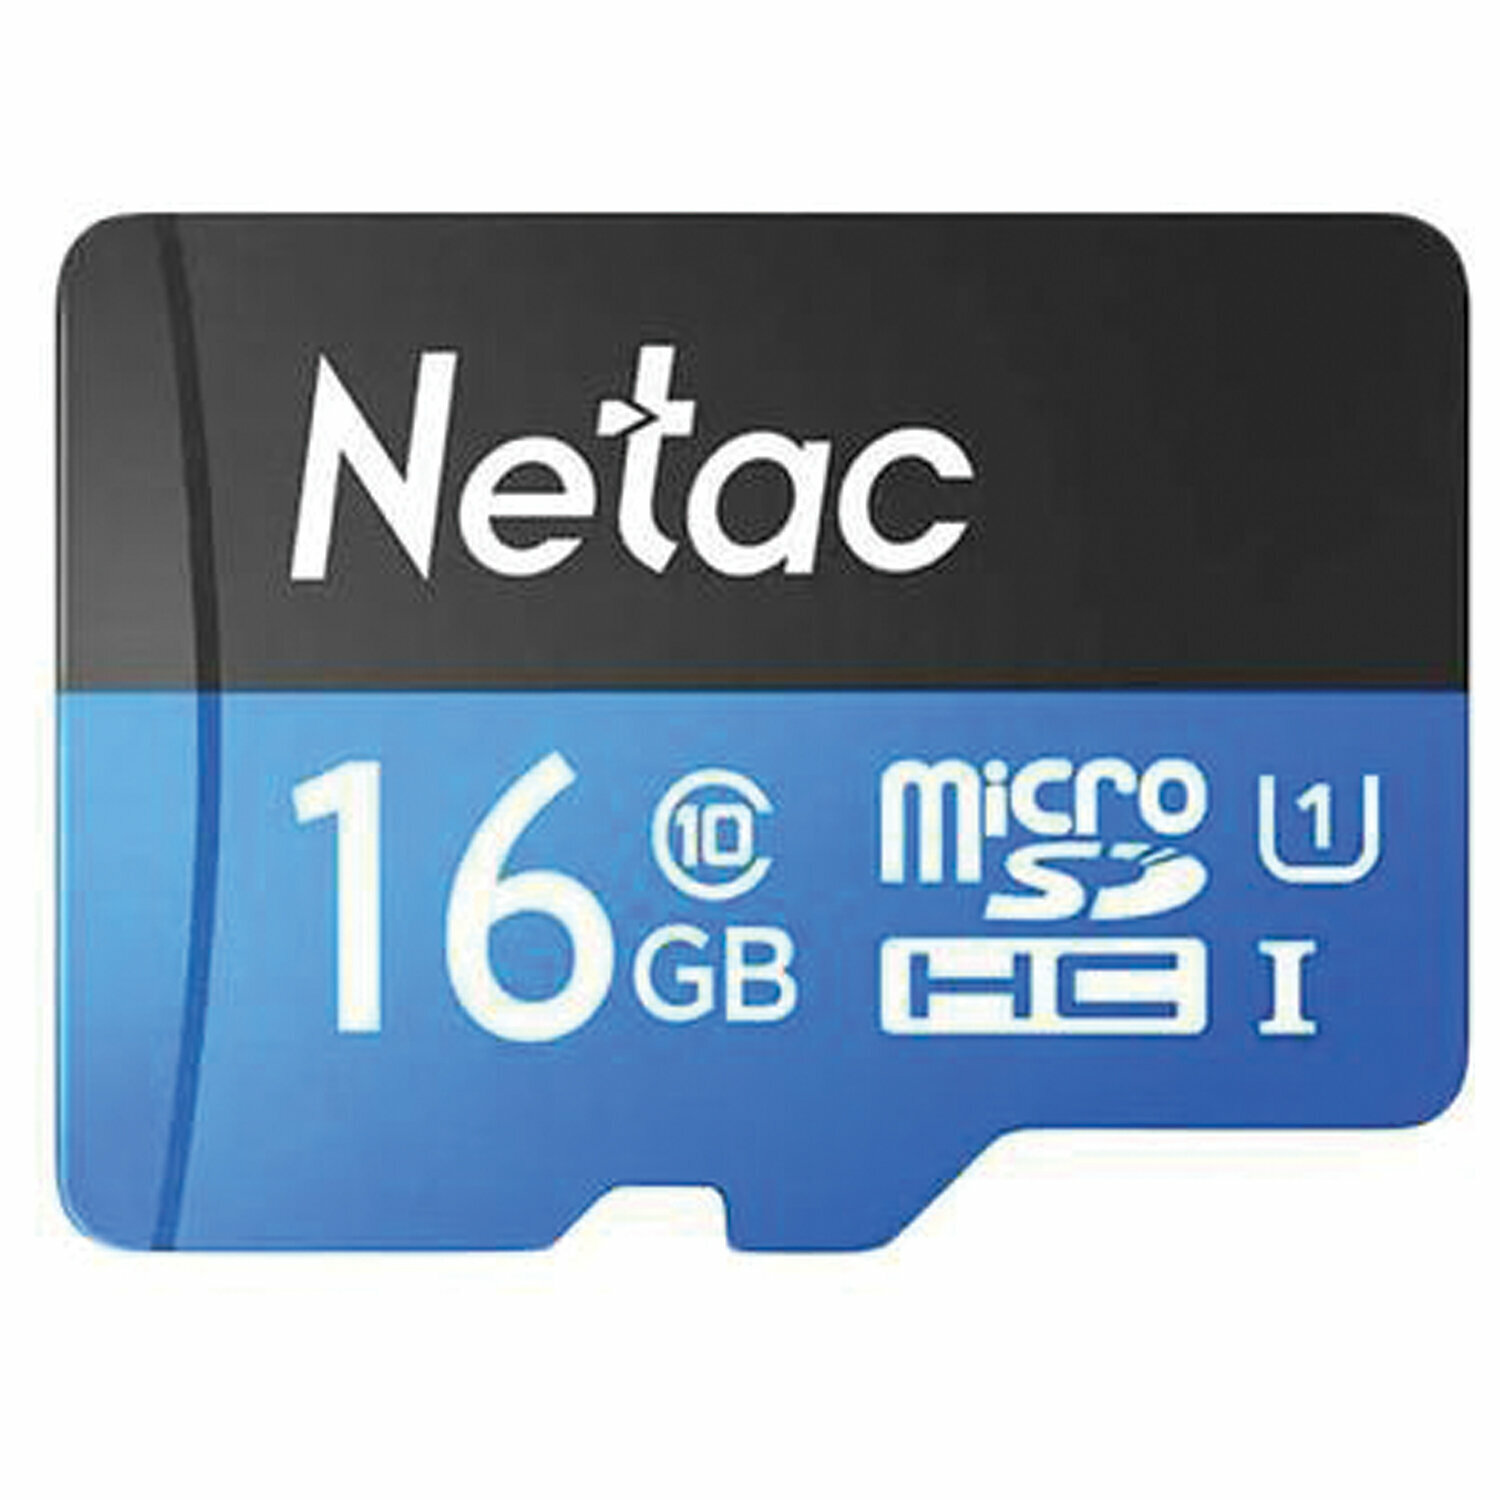 Карта памяти Netac microsdhc 16 гб, p500 standard, 80 мб/с class 10, адаптер (NT02P500STN-016)